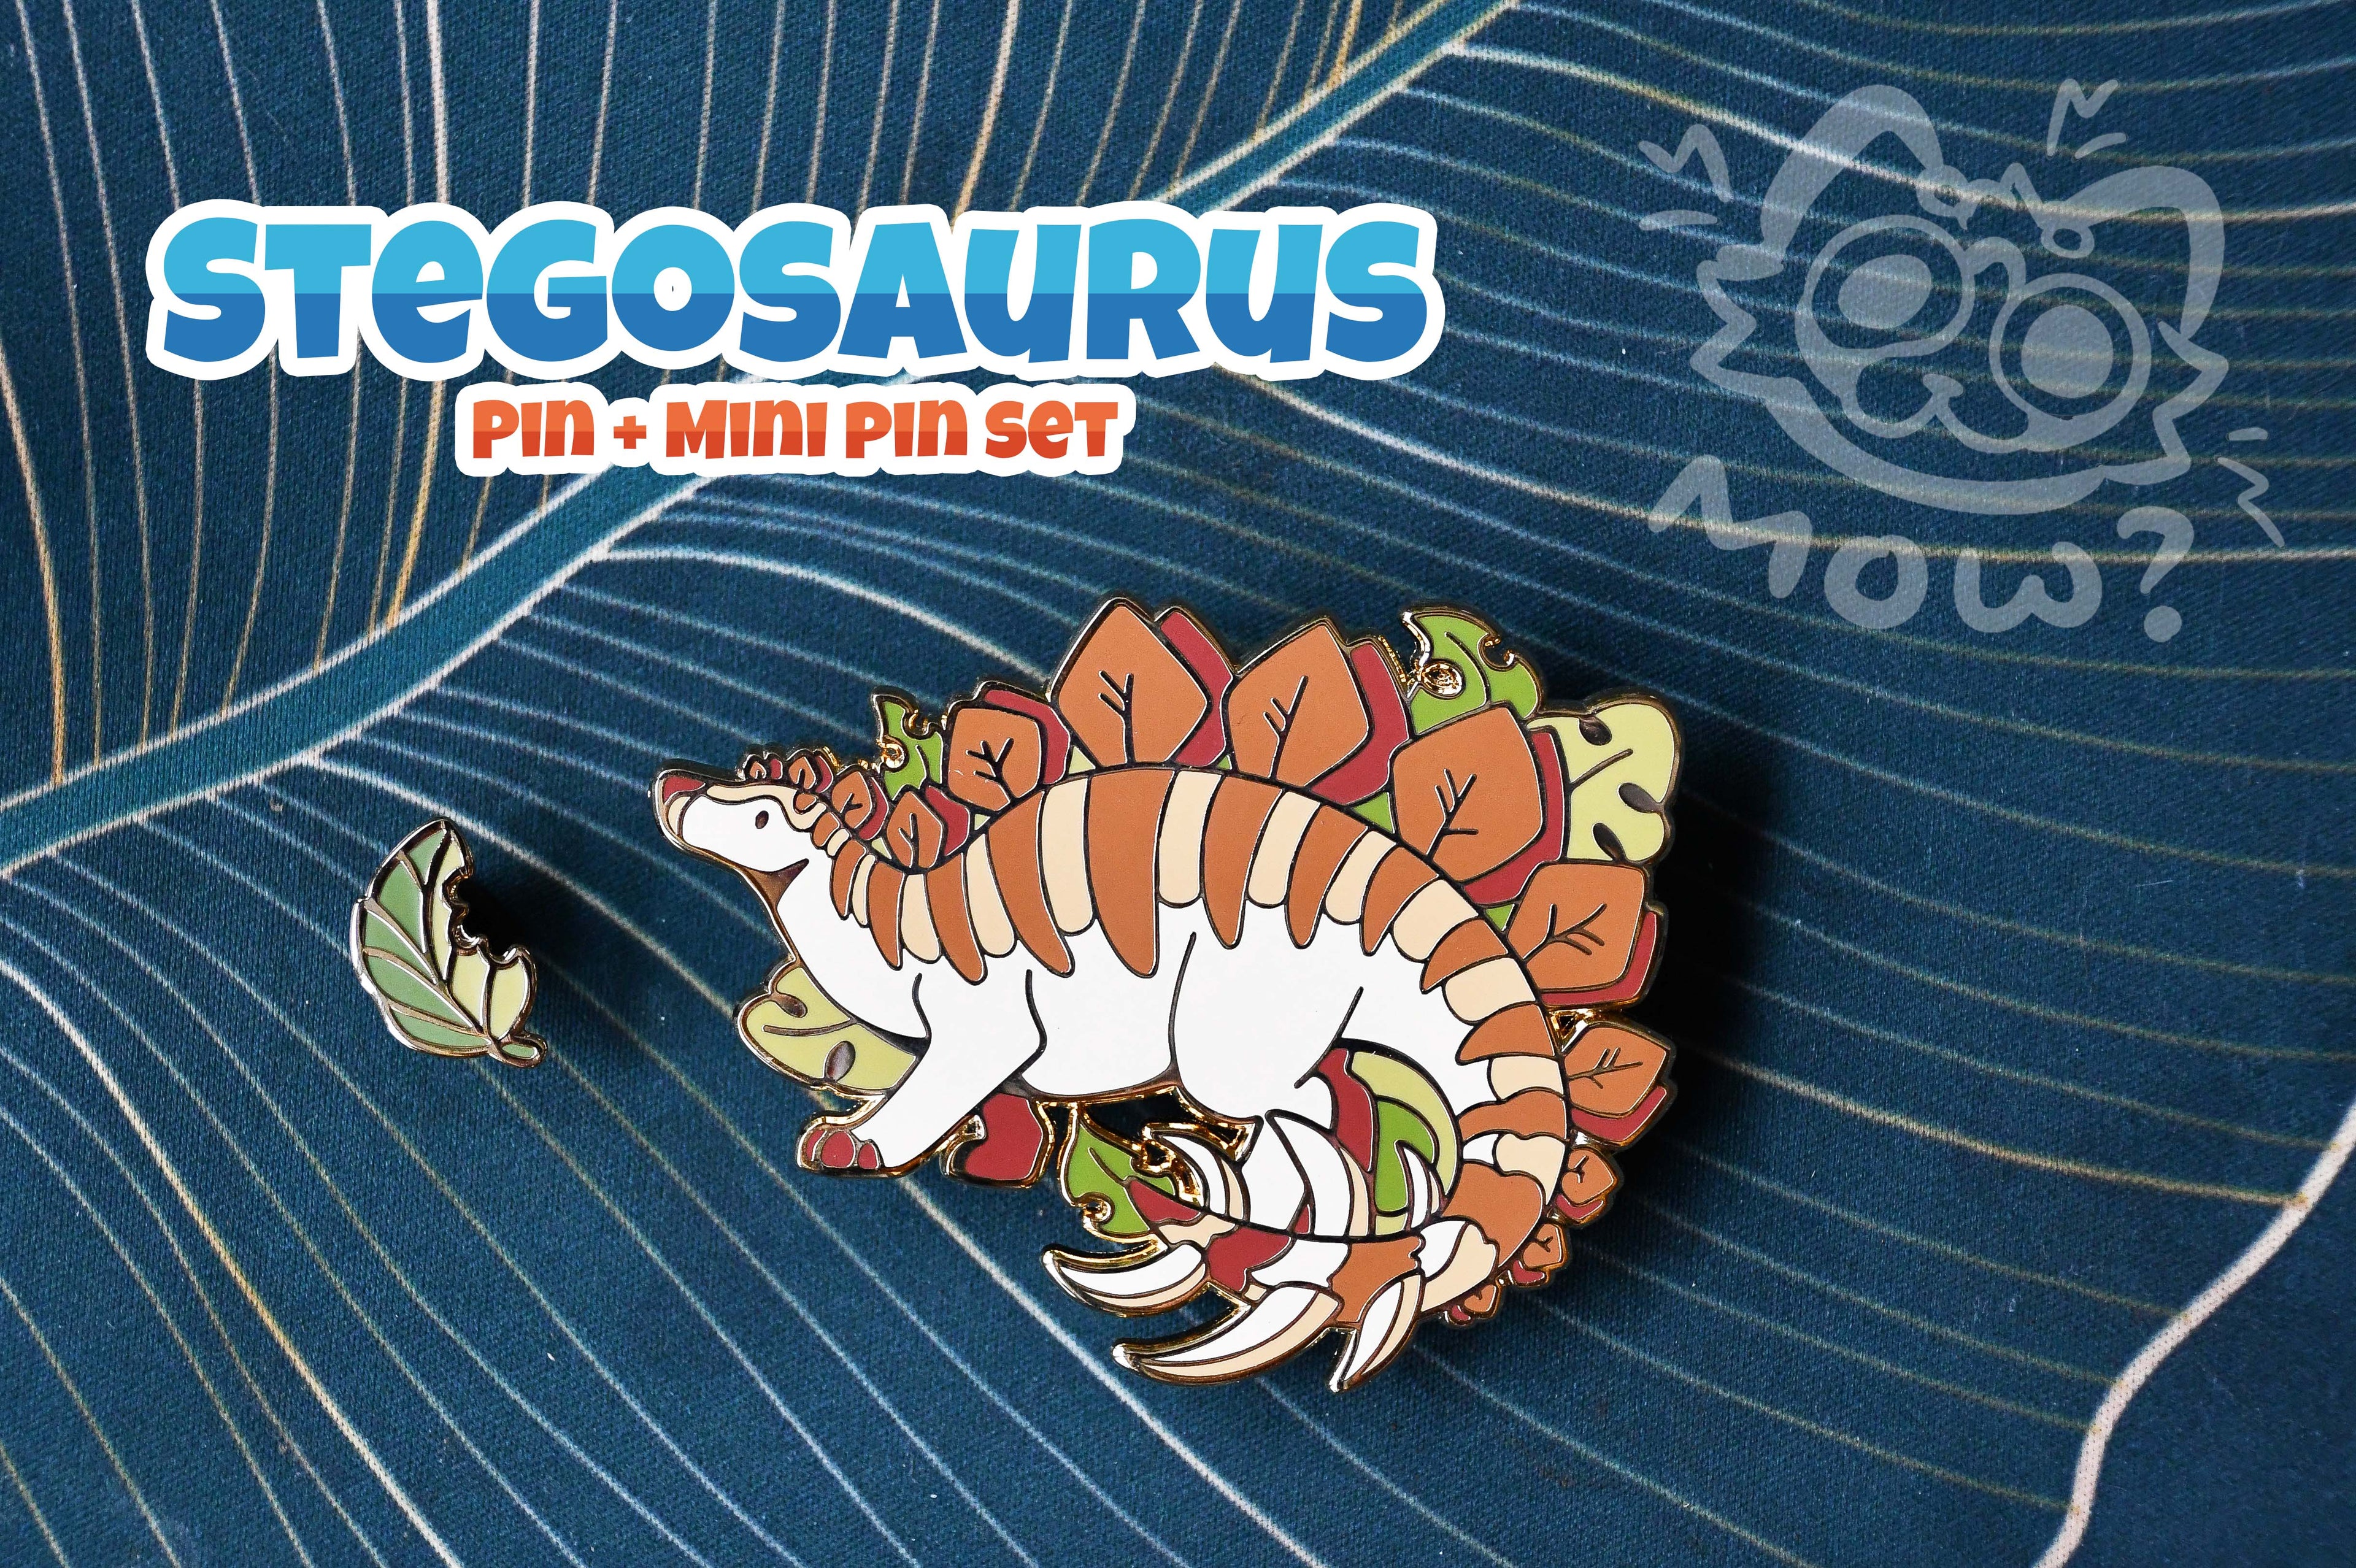 Stegosaurus Pin + Leaf Mini Pin set